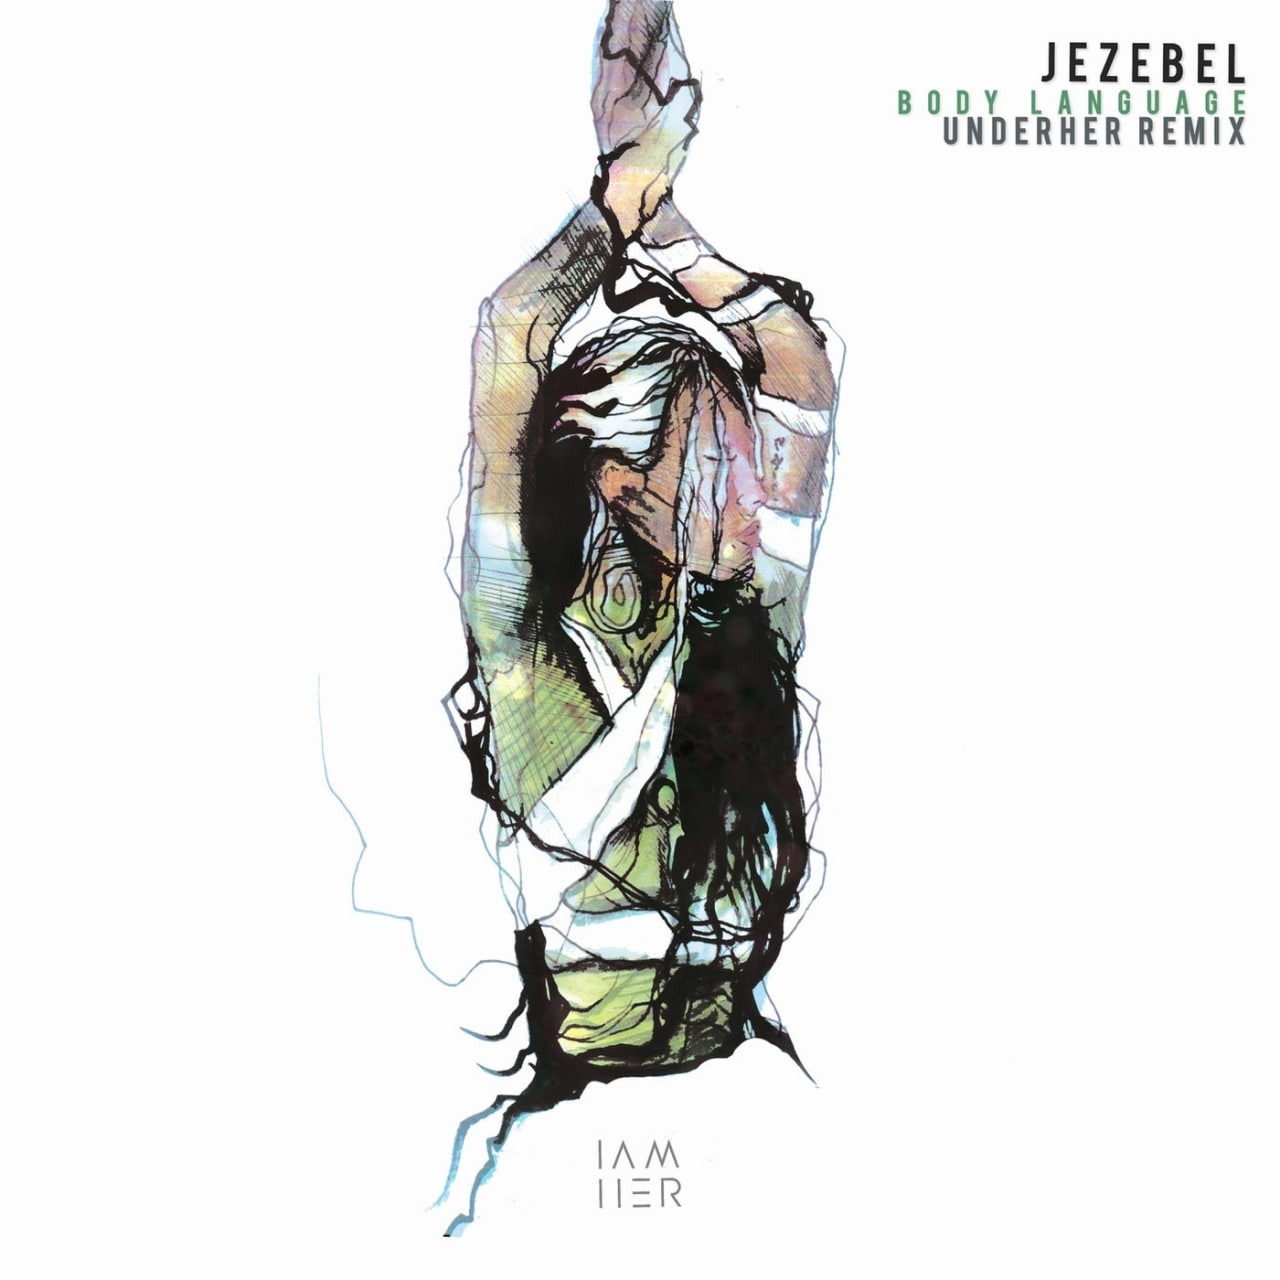 Jezebel - Body Language (Underher Remix)